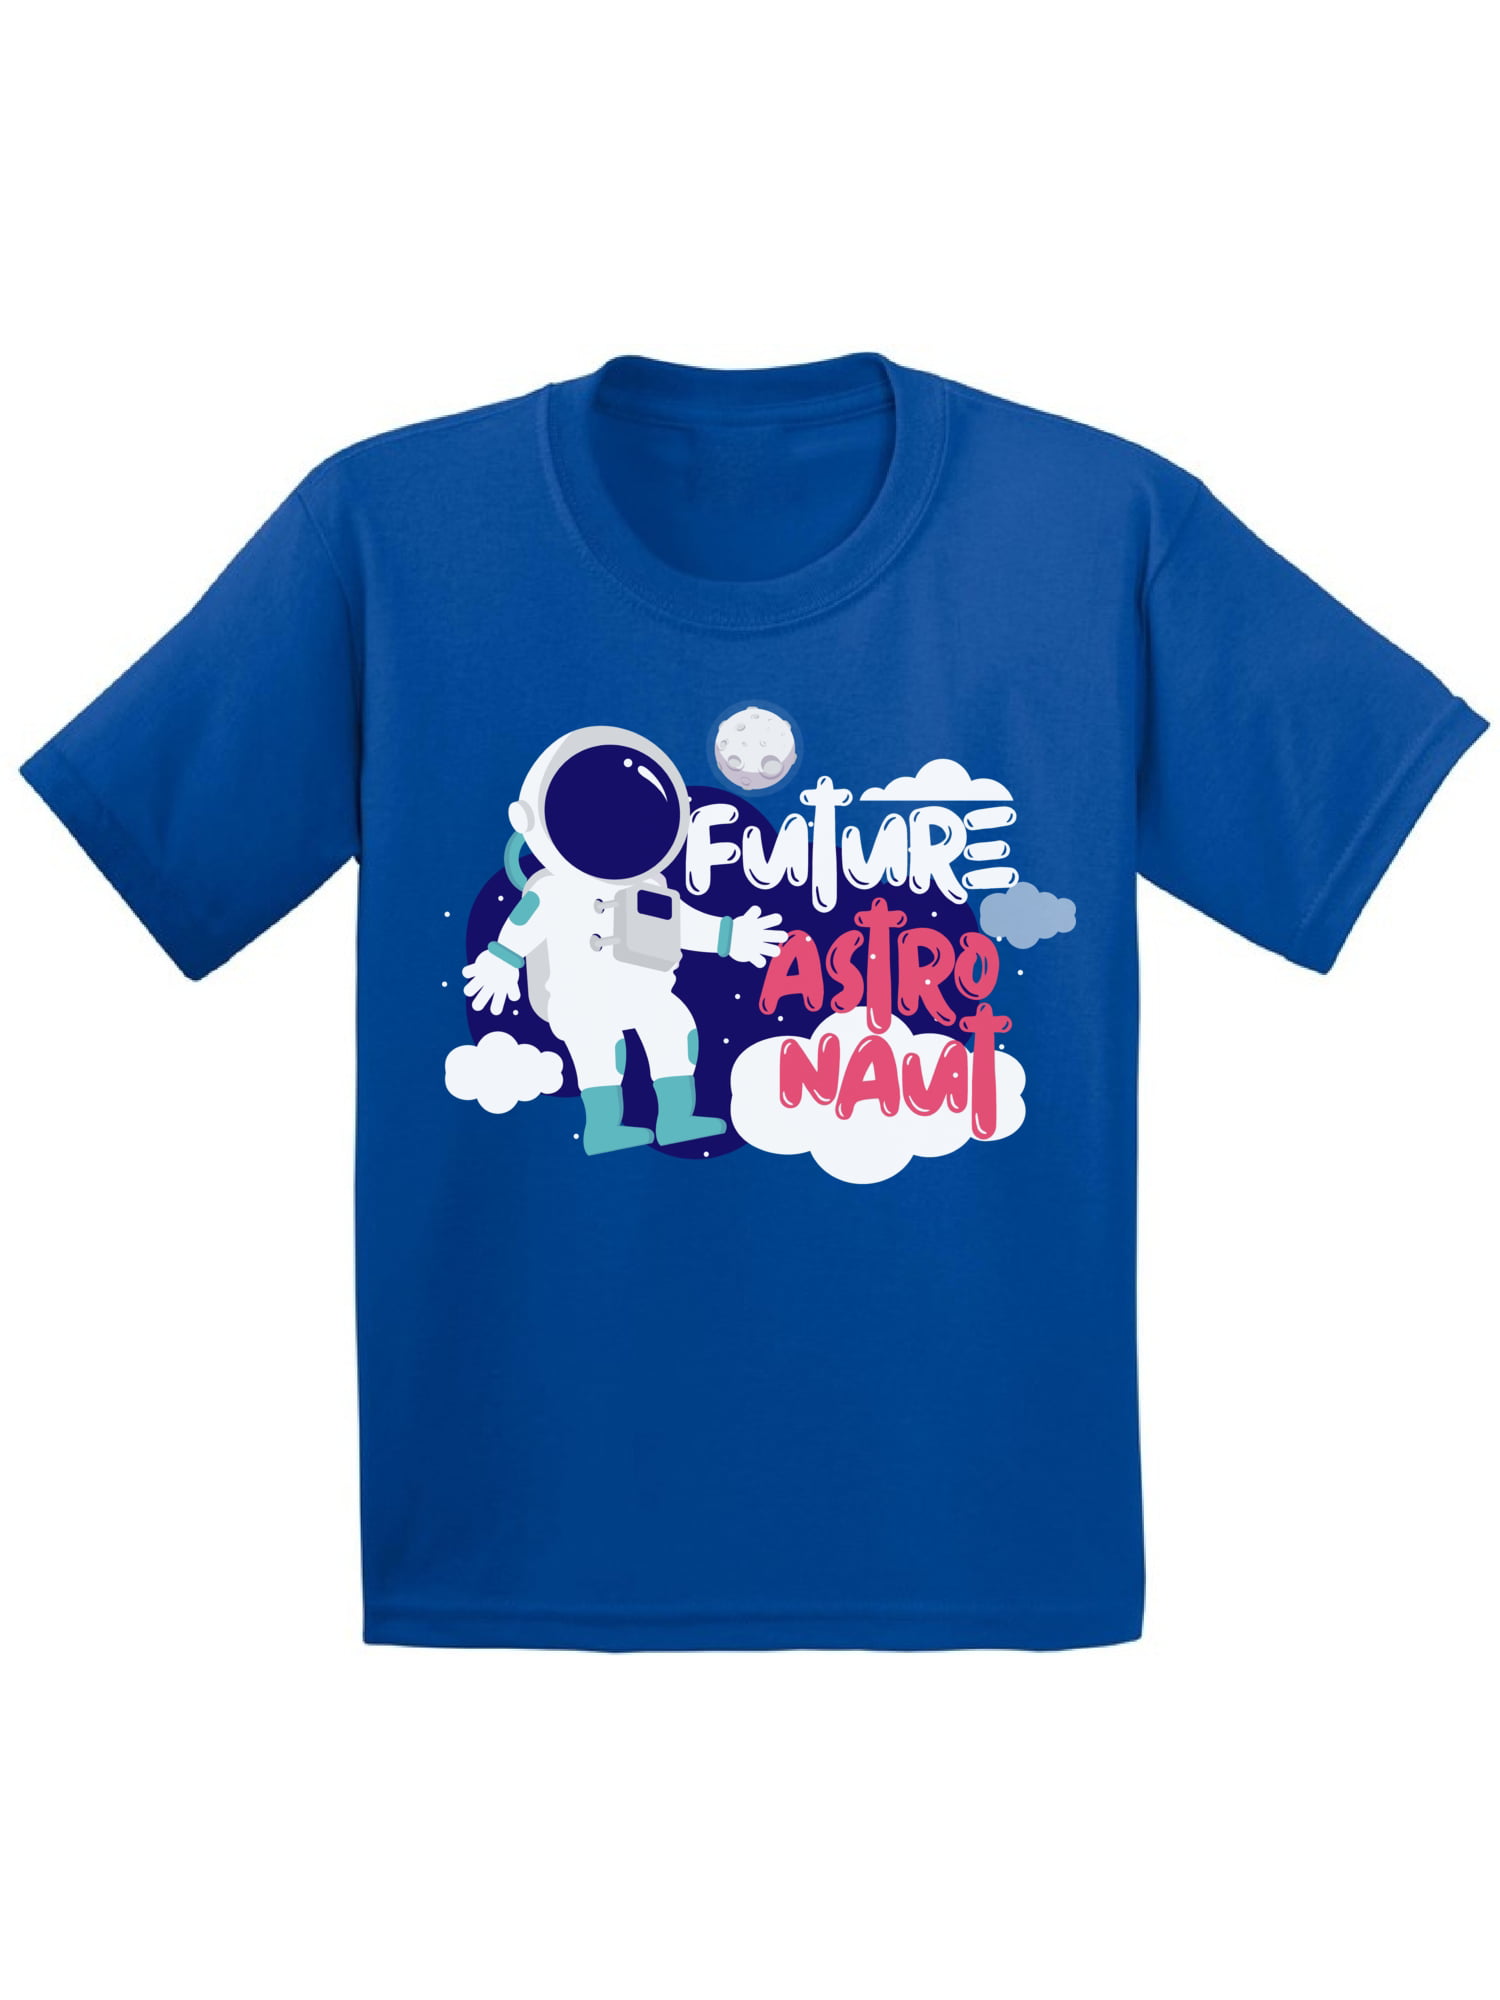 Cosmonaut Gifts Astronaut Gift Astronaut Shirt Rocket Shirt Astronaut Costume Unisex Astronaut T-Shirt Astronaut Space Shirt